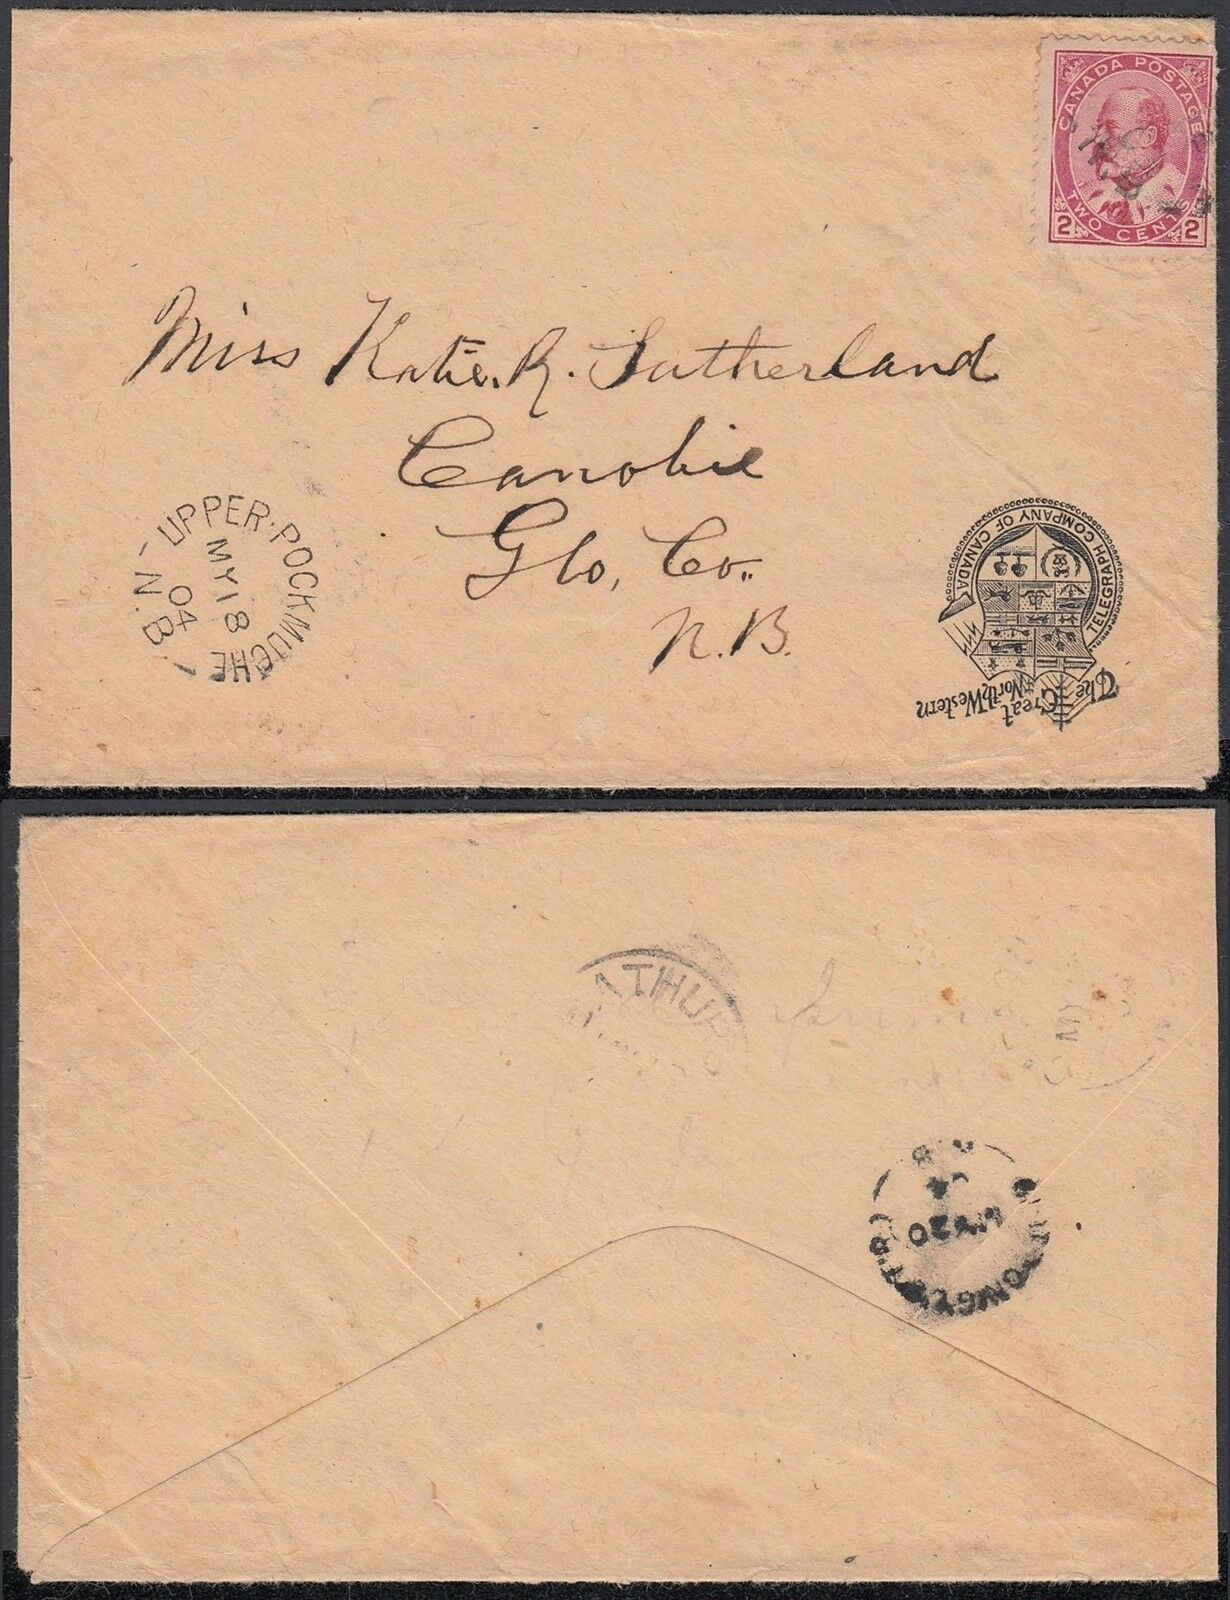 GNW Envelope of 1904